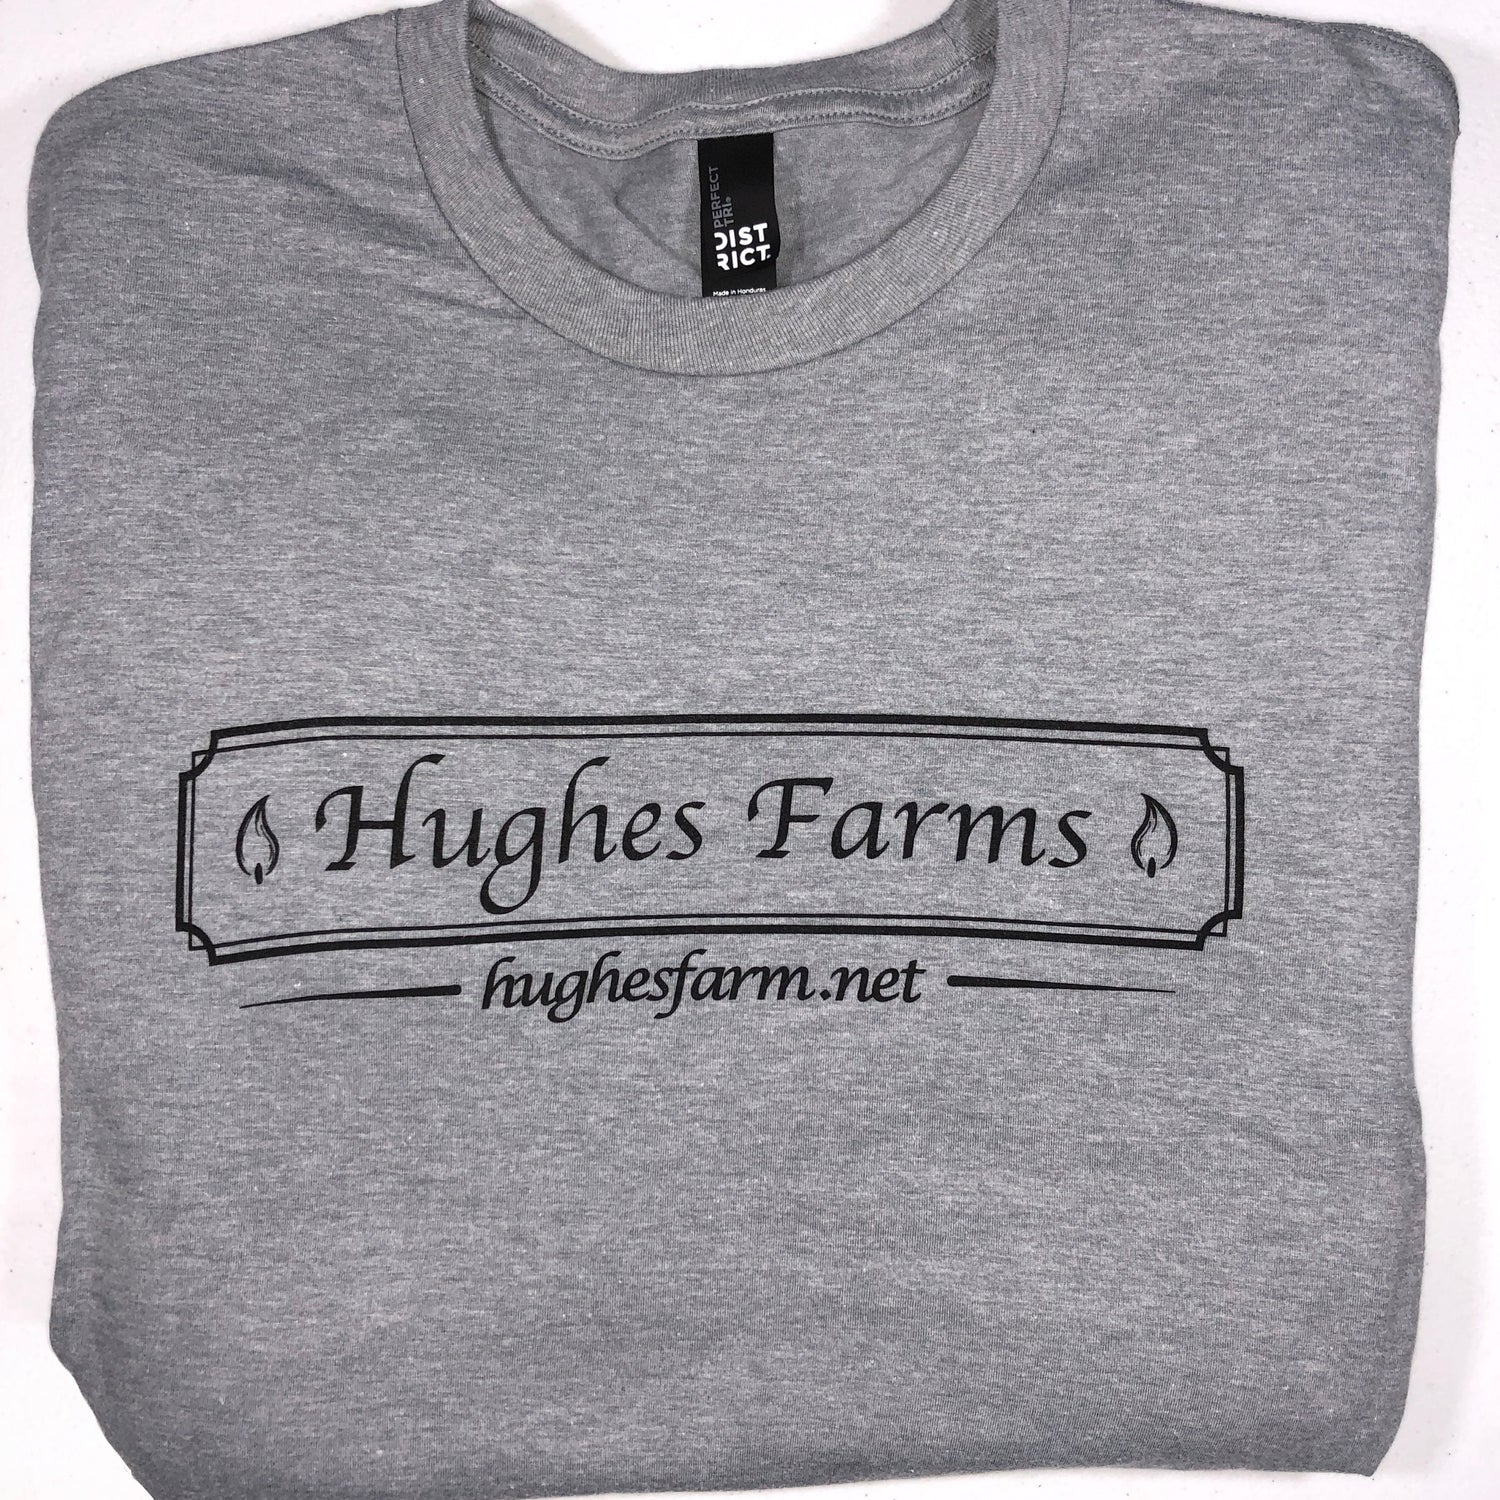 A pair of hughesfarms shirts